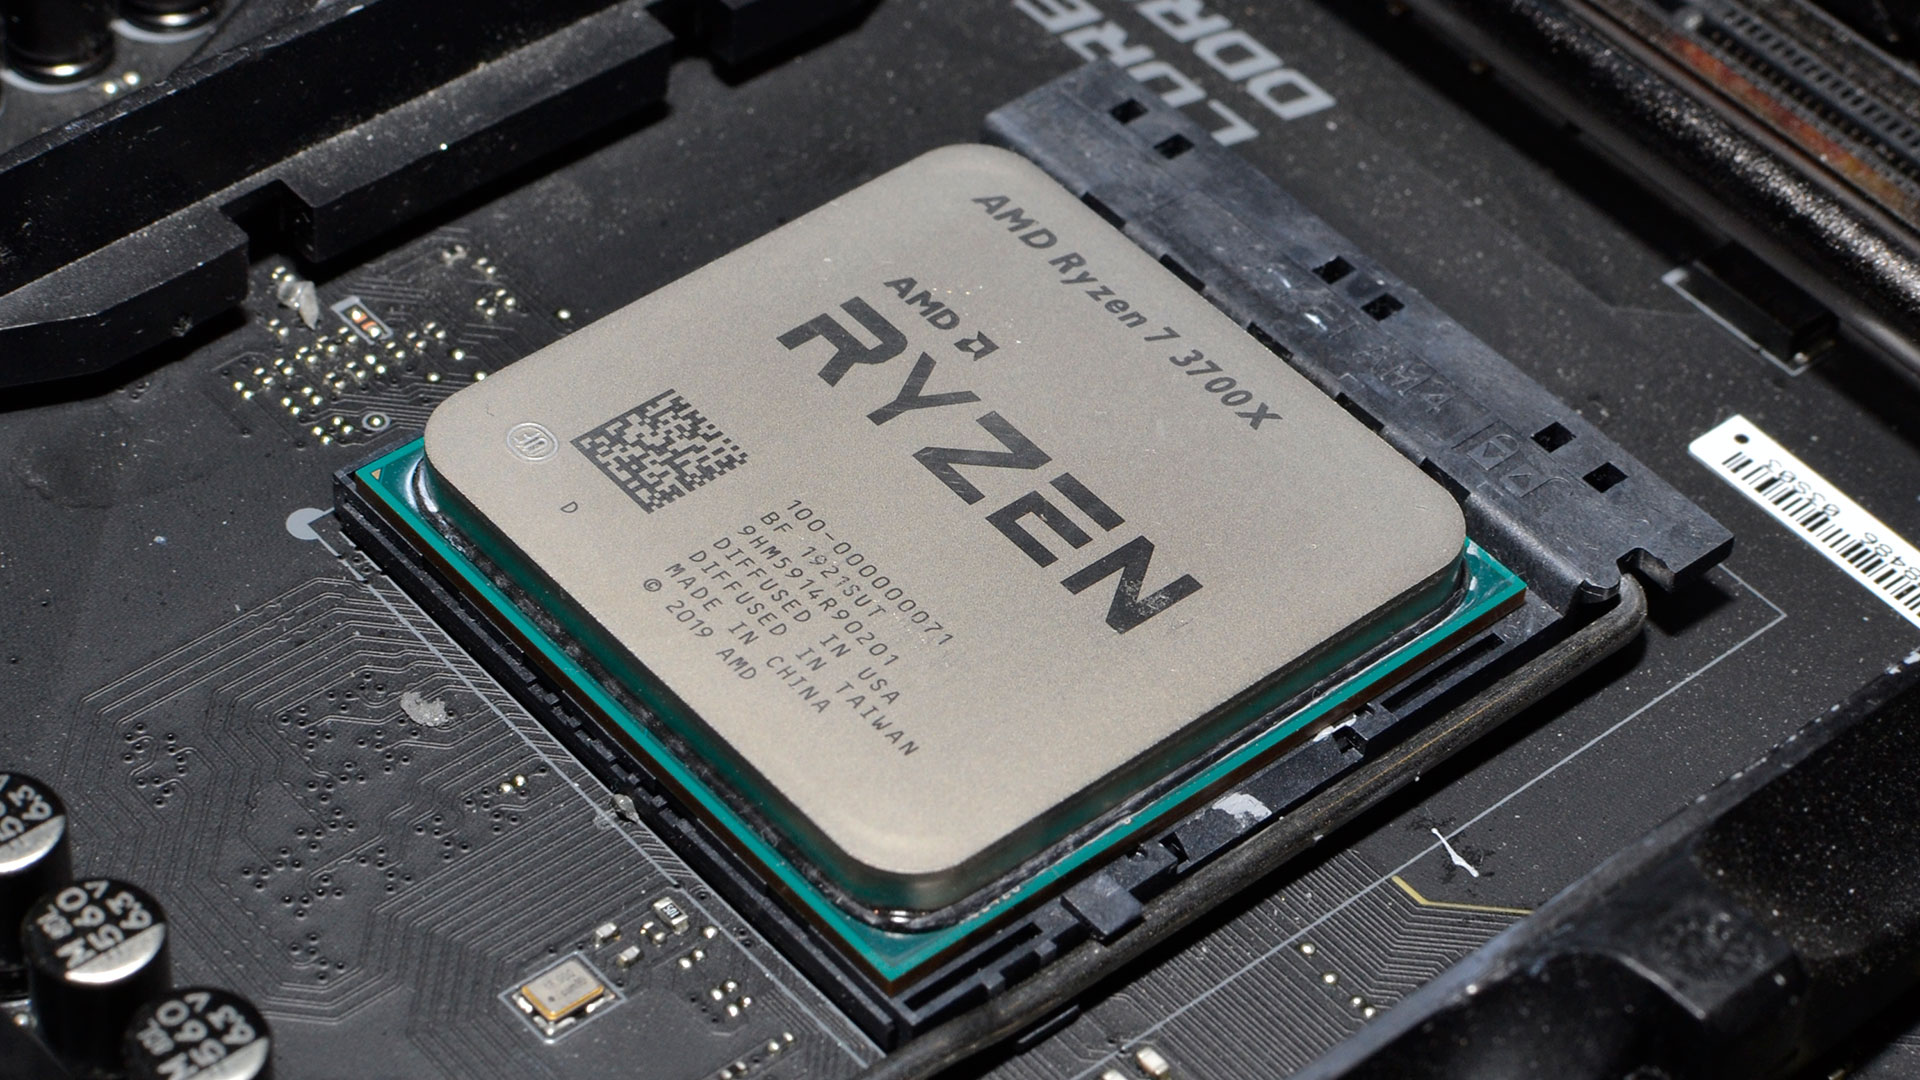 純正新販売 Ryzen7 3700X PCパーツ